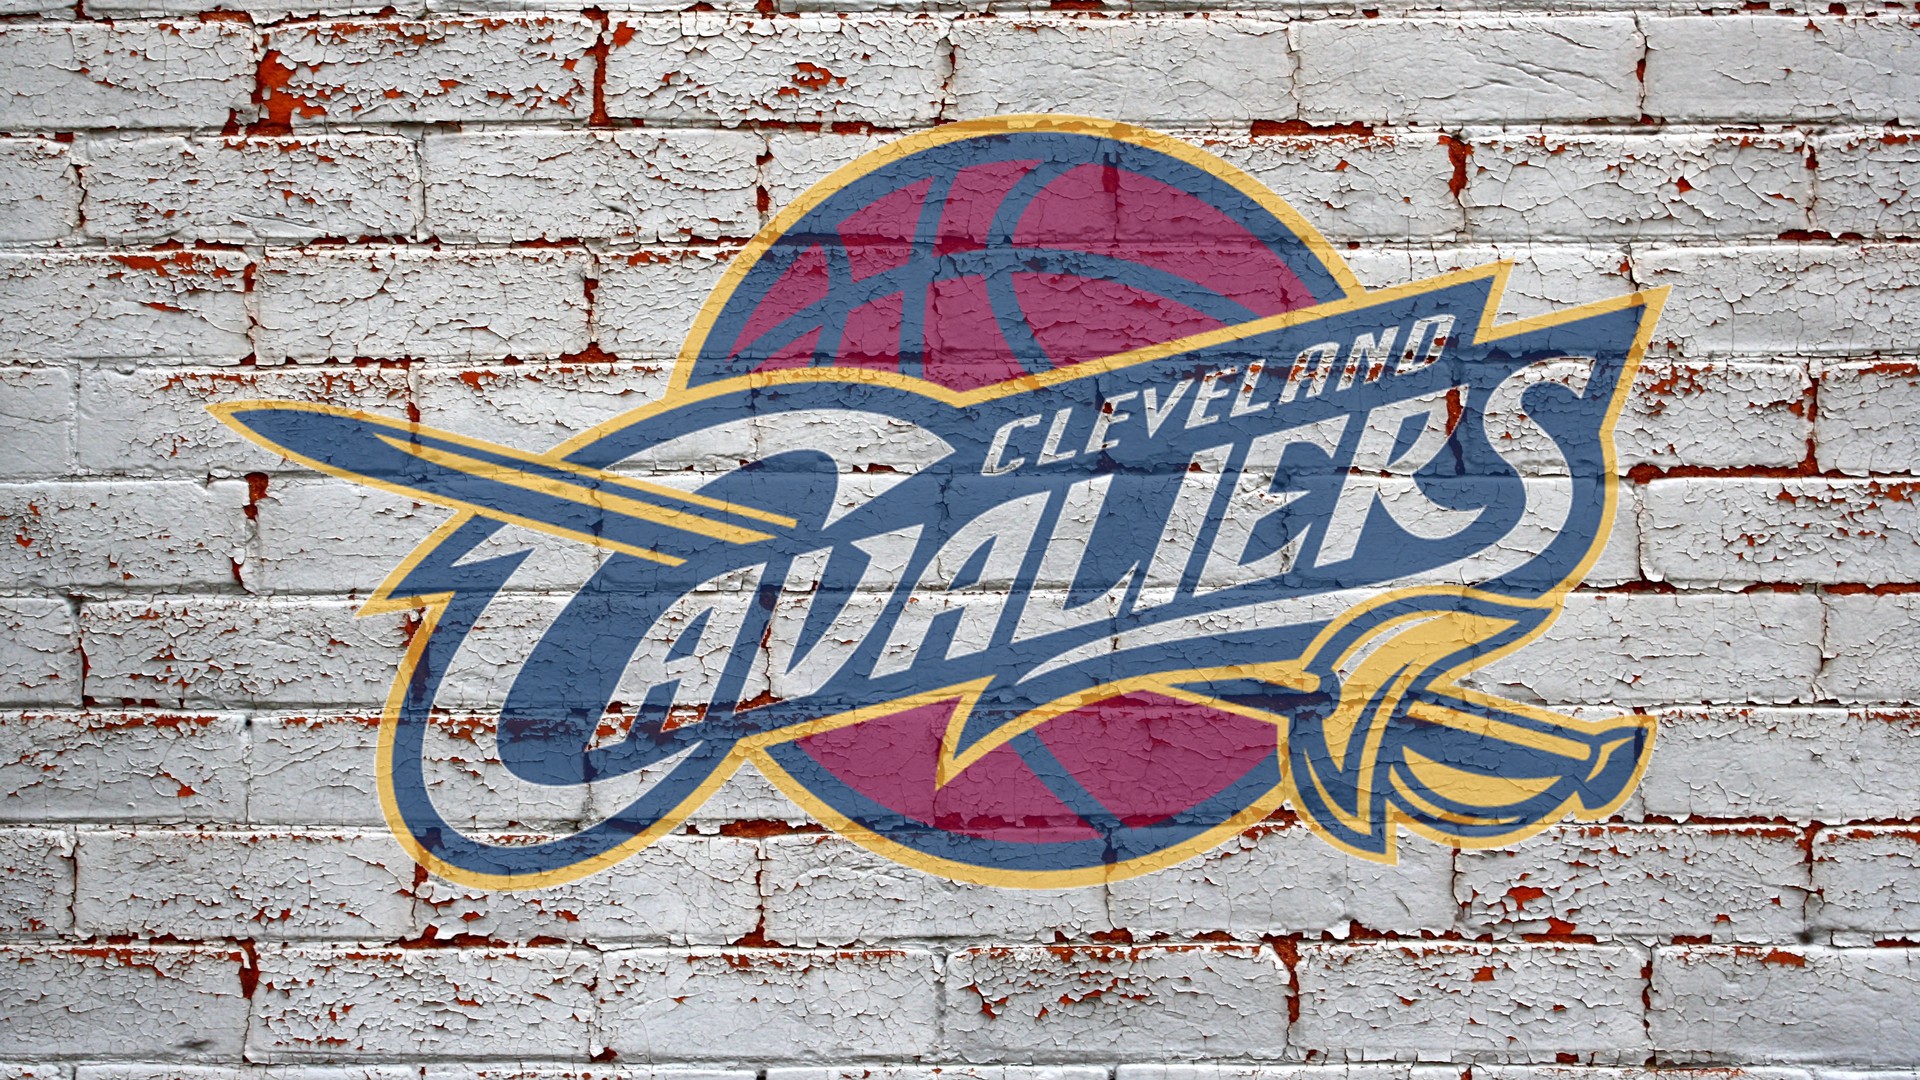 Cleveland Cavaliers HD Wallpaper